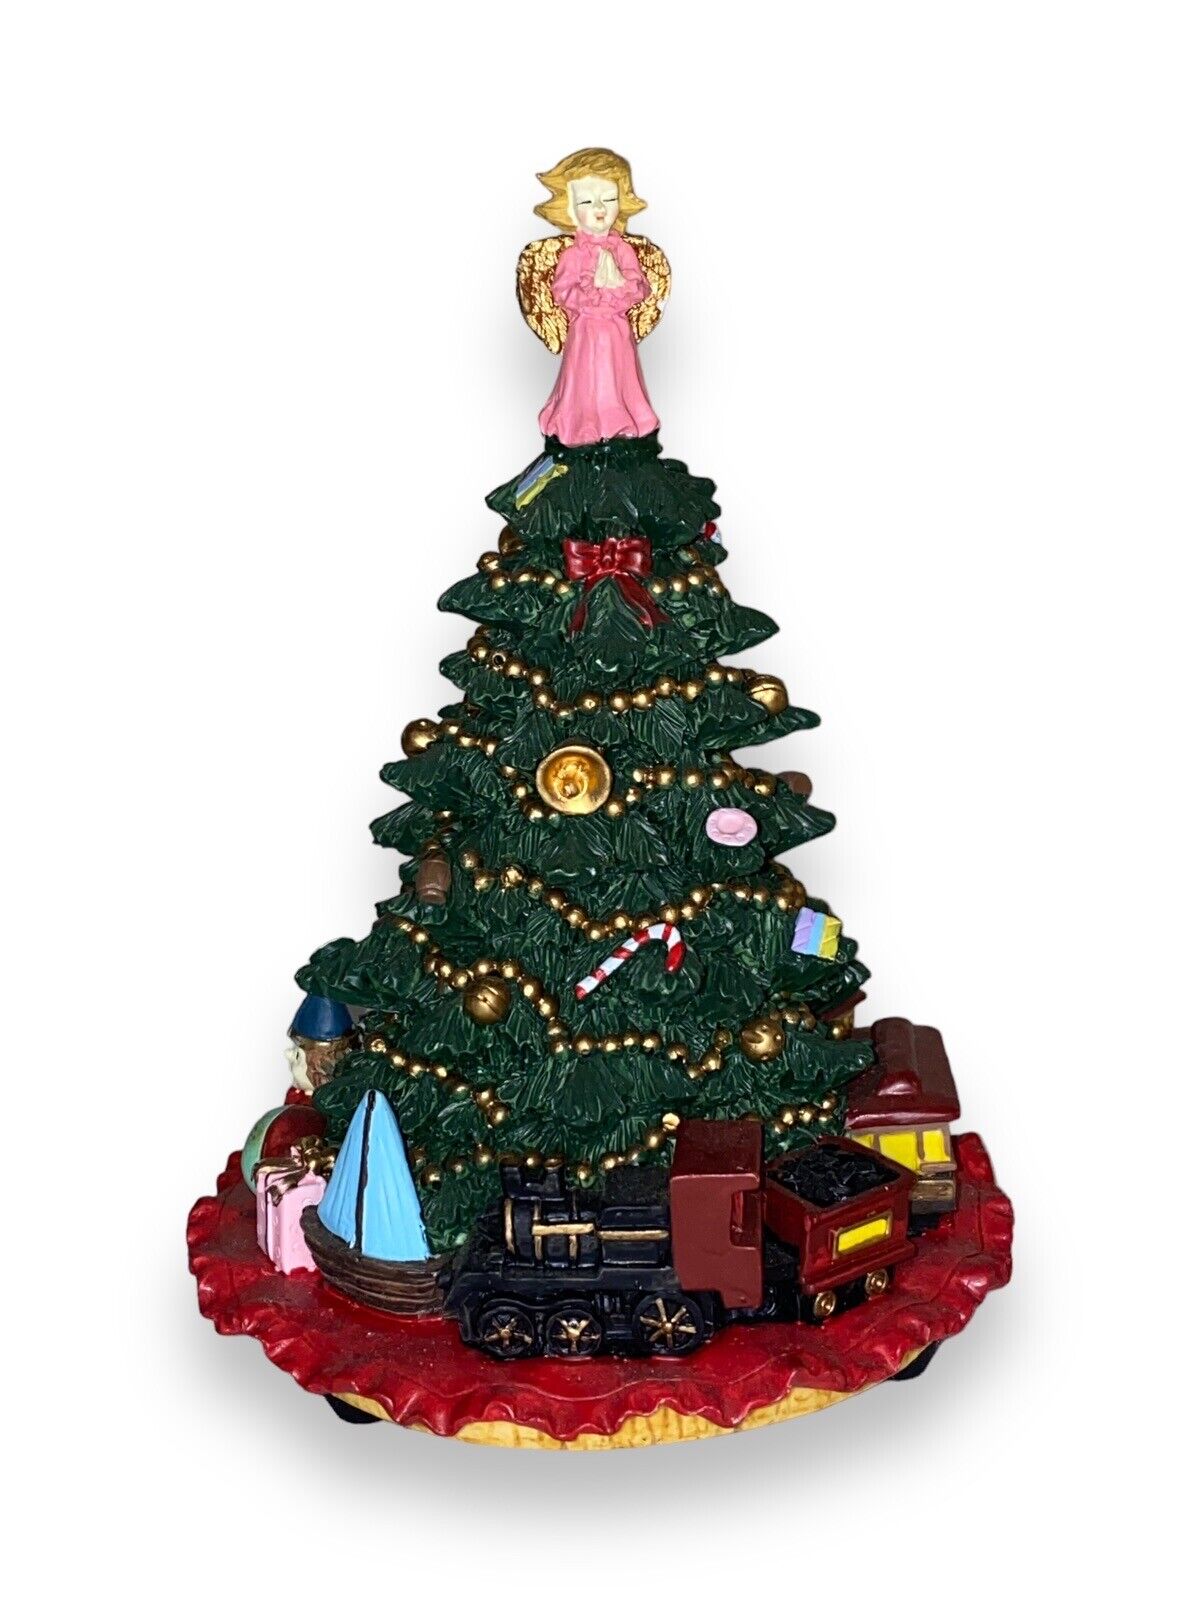 Vintage Herco Musical Christmas Tree “Oh Christmas Tree” Carousel Train Set